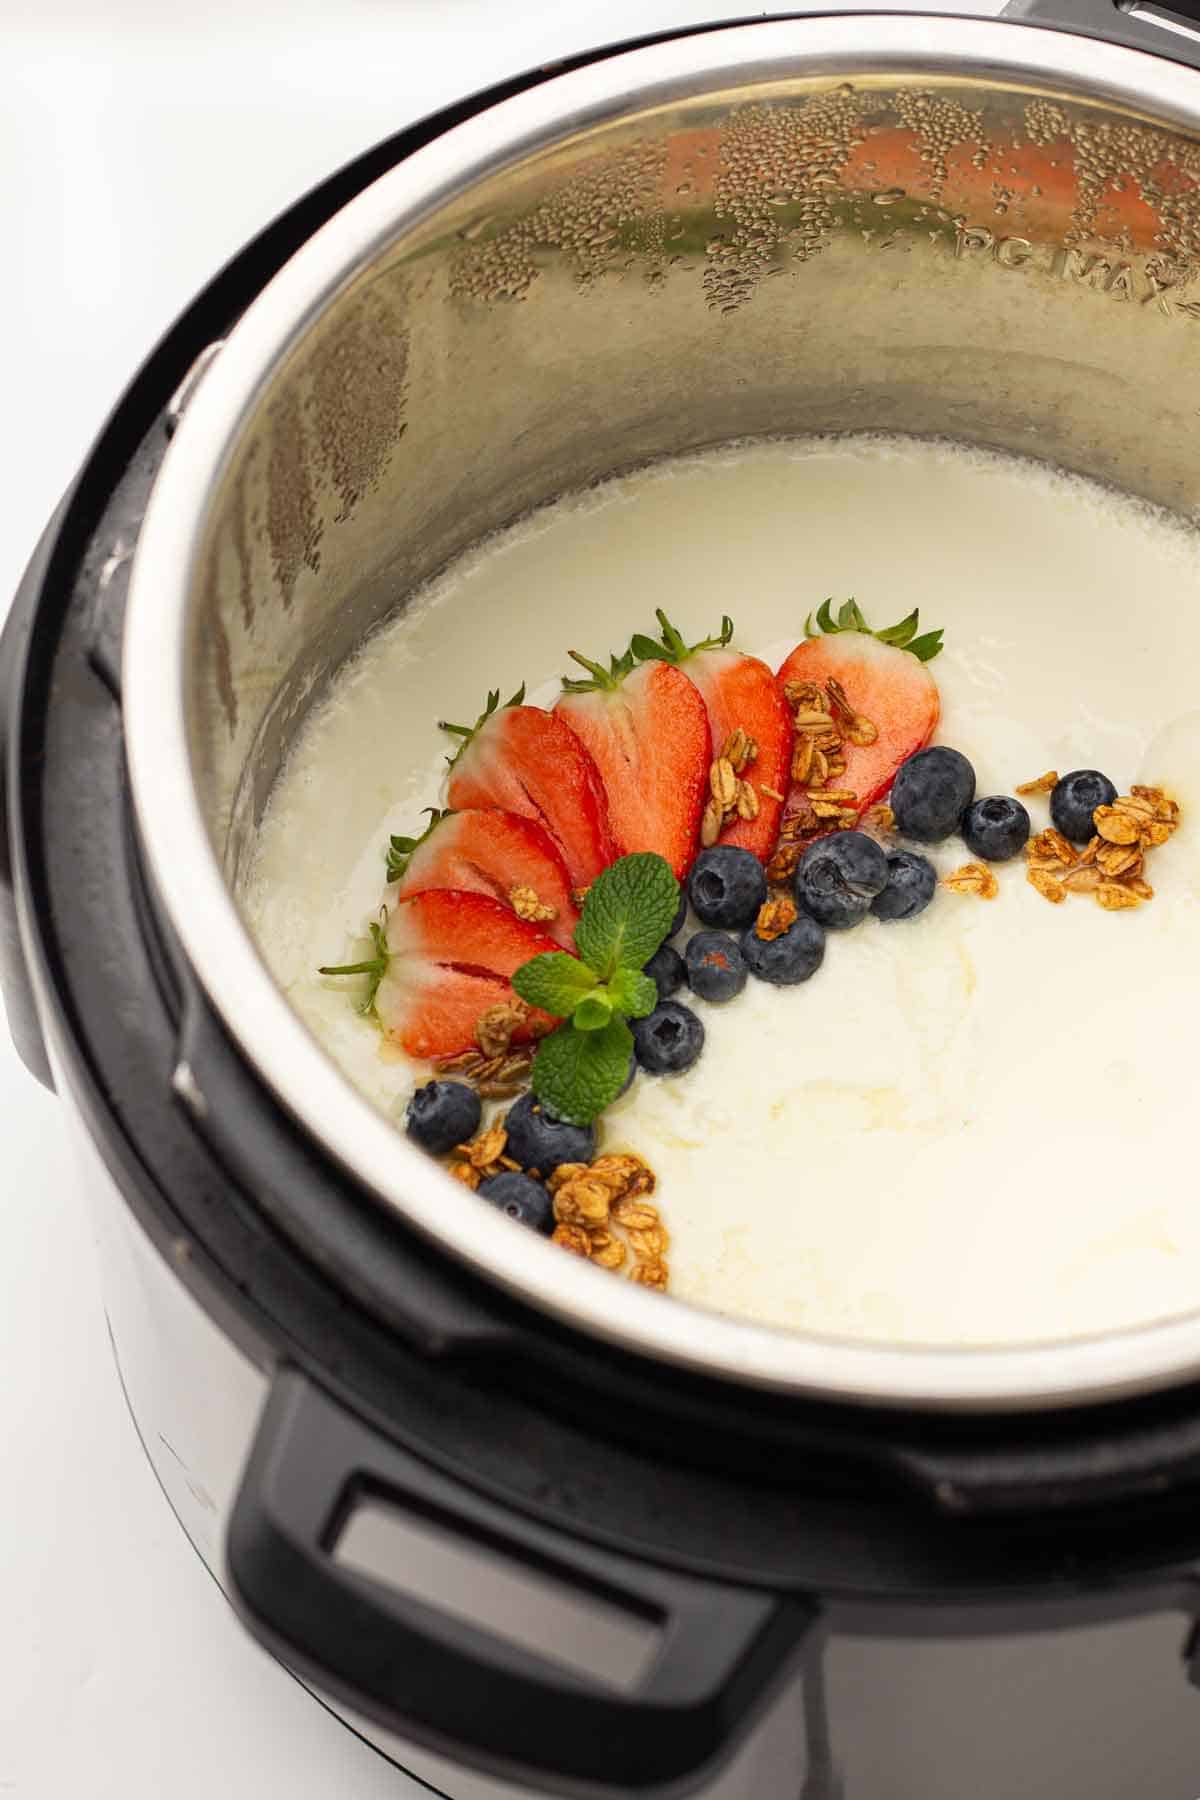 Instant pot yogurt with berries and granola.